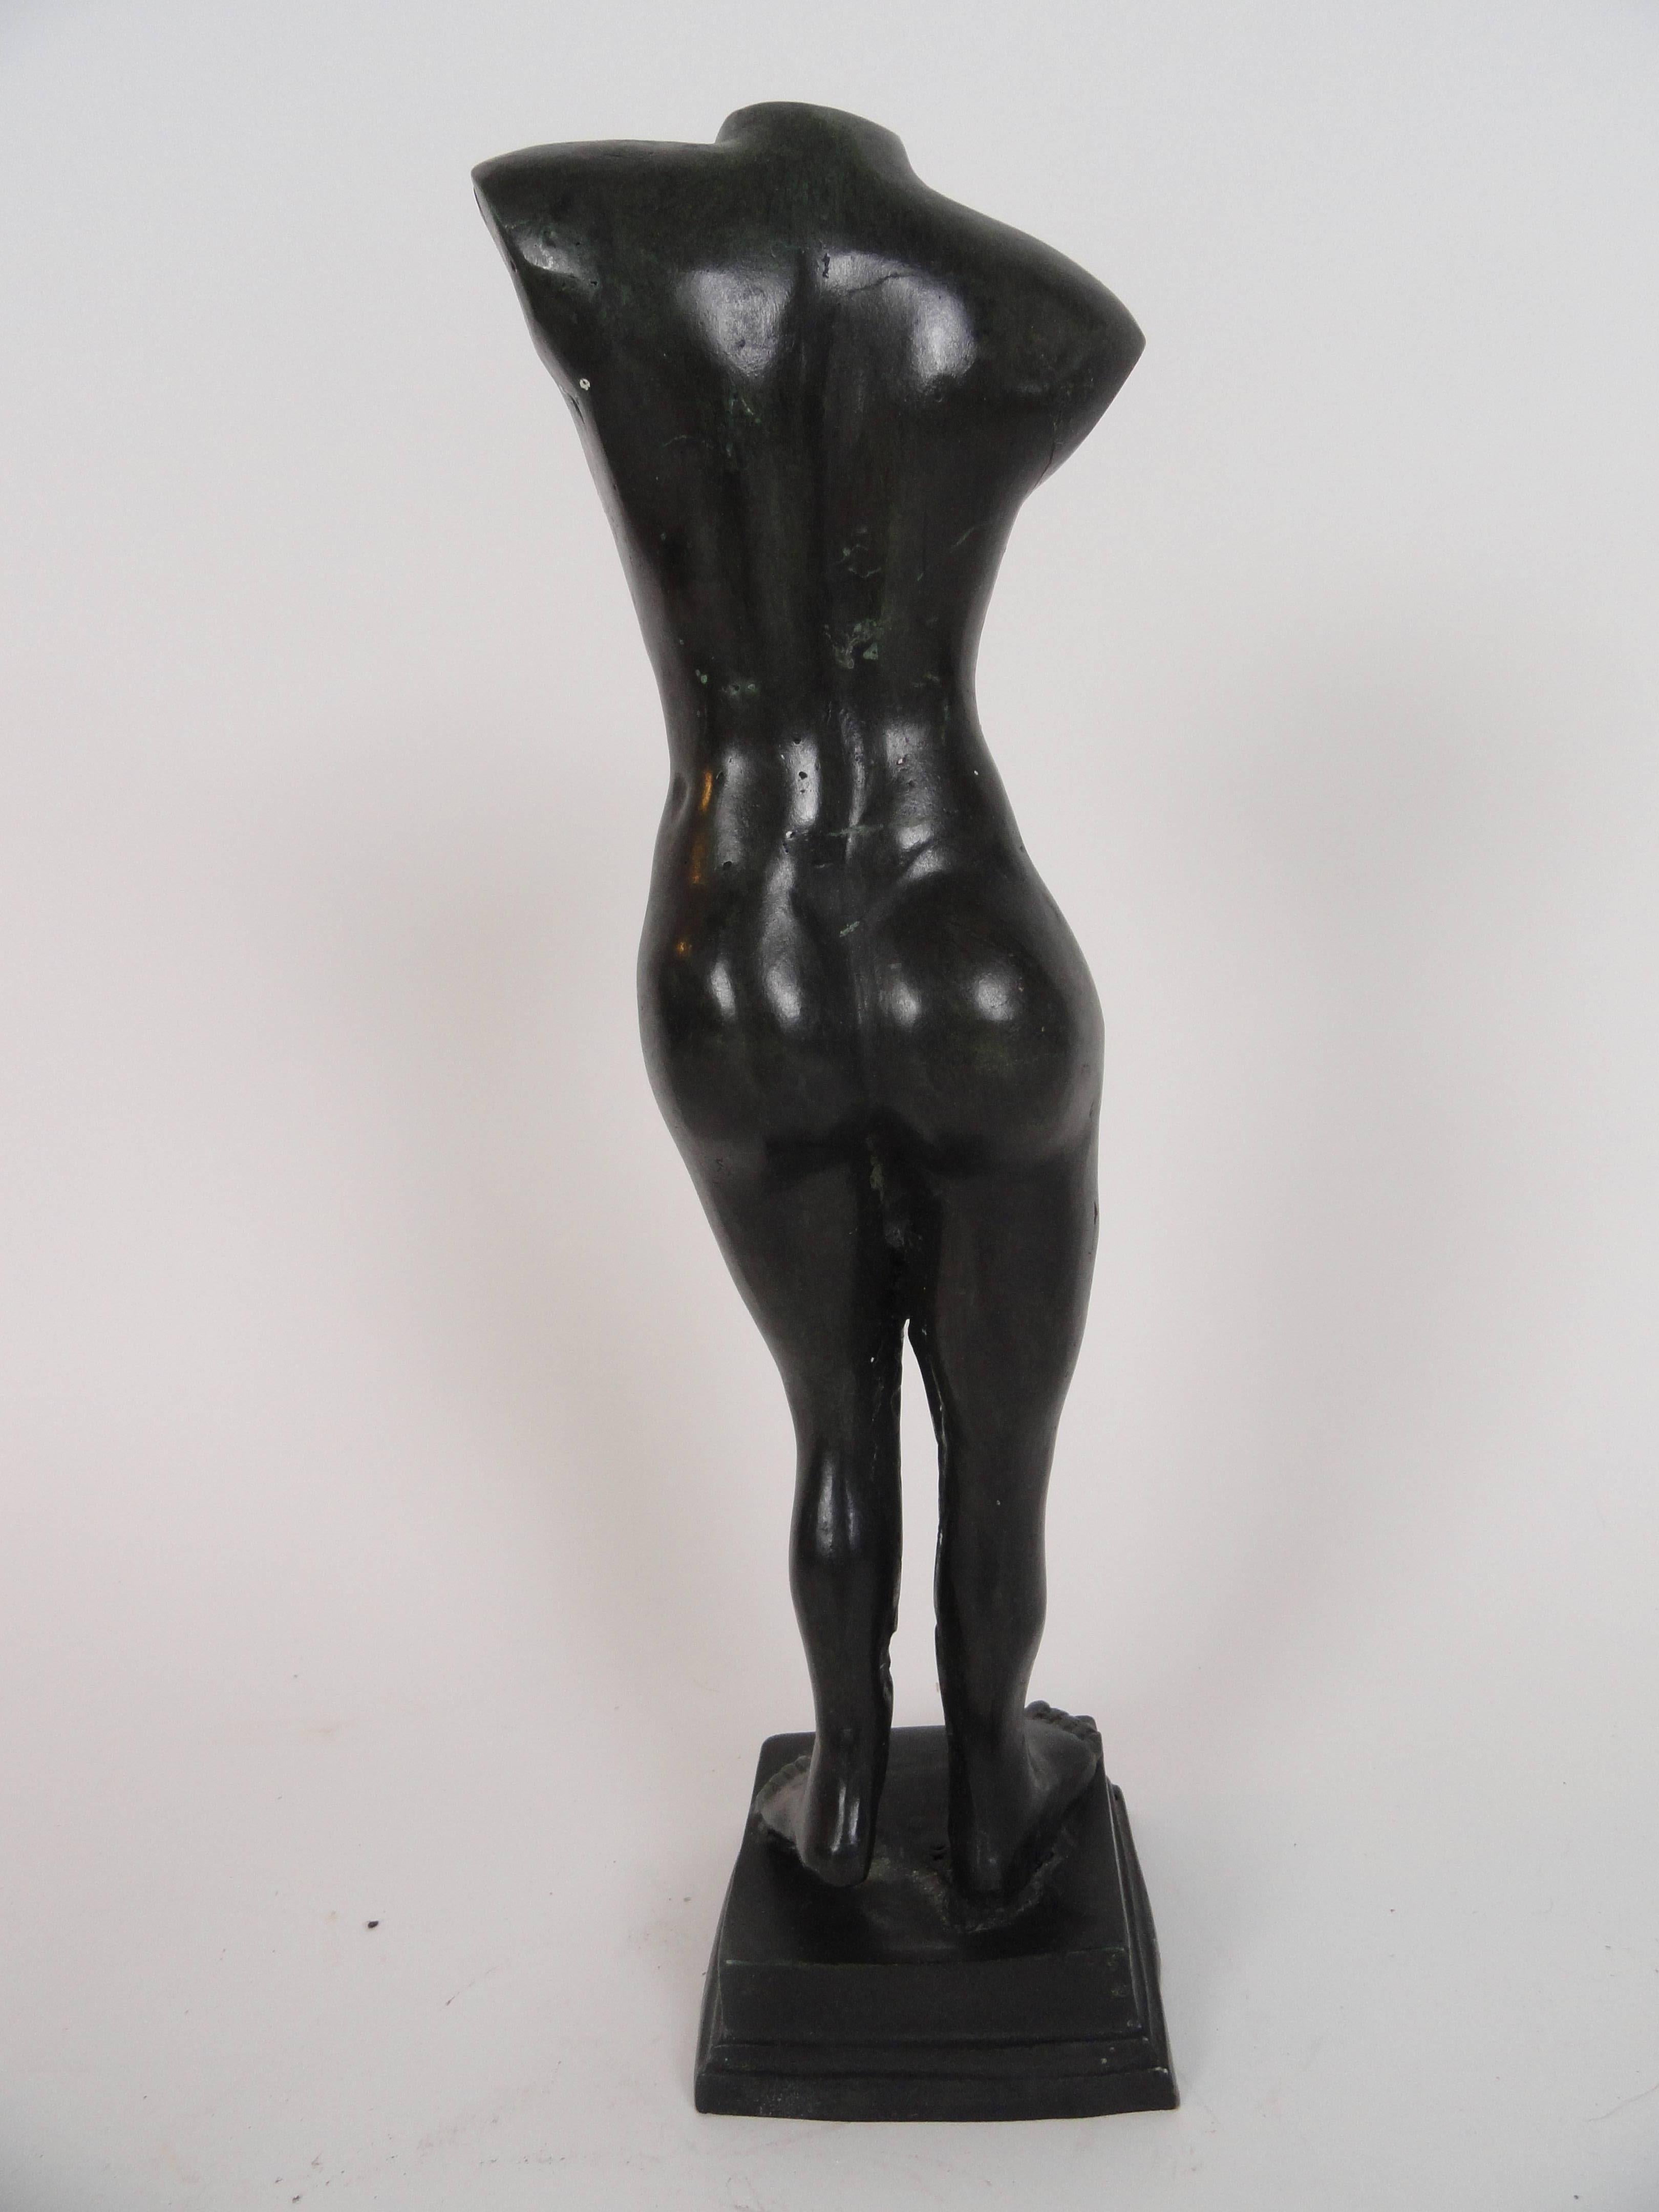 20th century Venus metal sculpture of female nude figure. 
Unsigned.